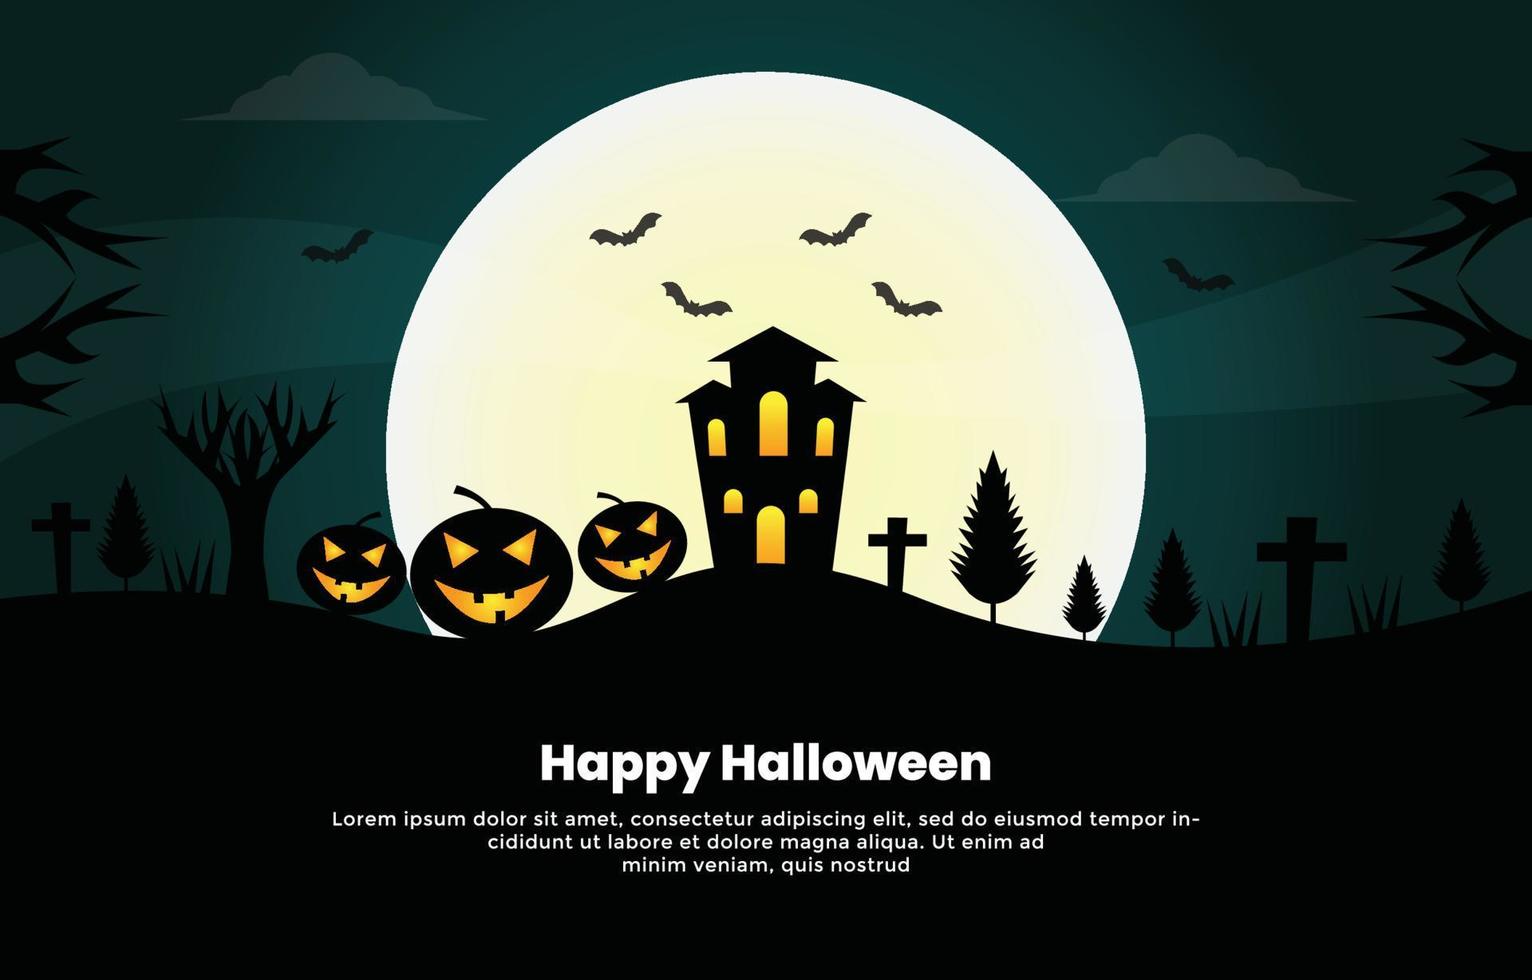 Halloween illustration with pumpkins vector background design